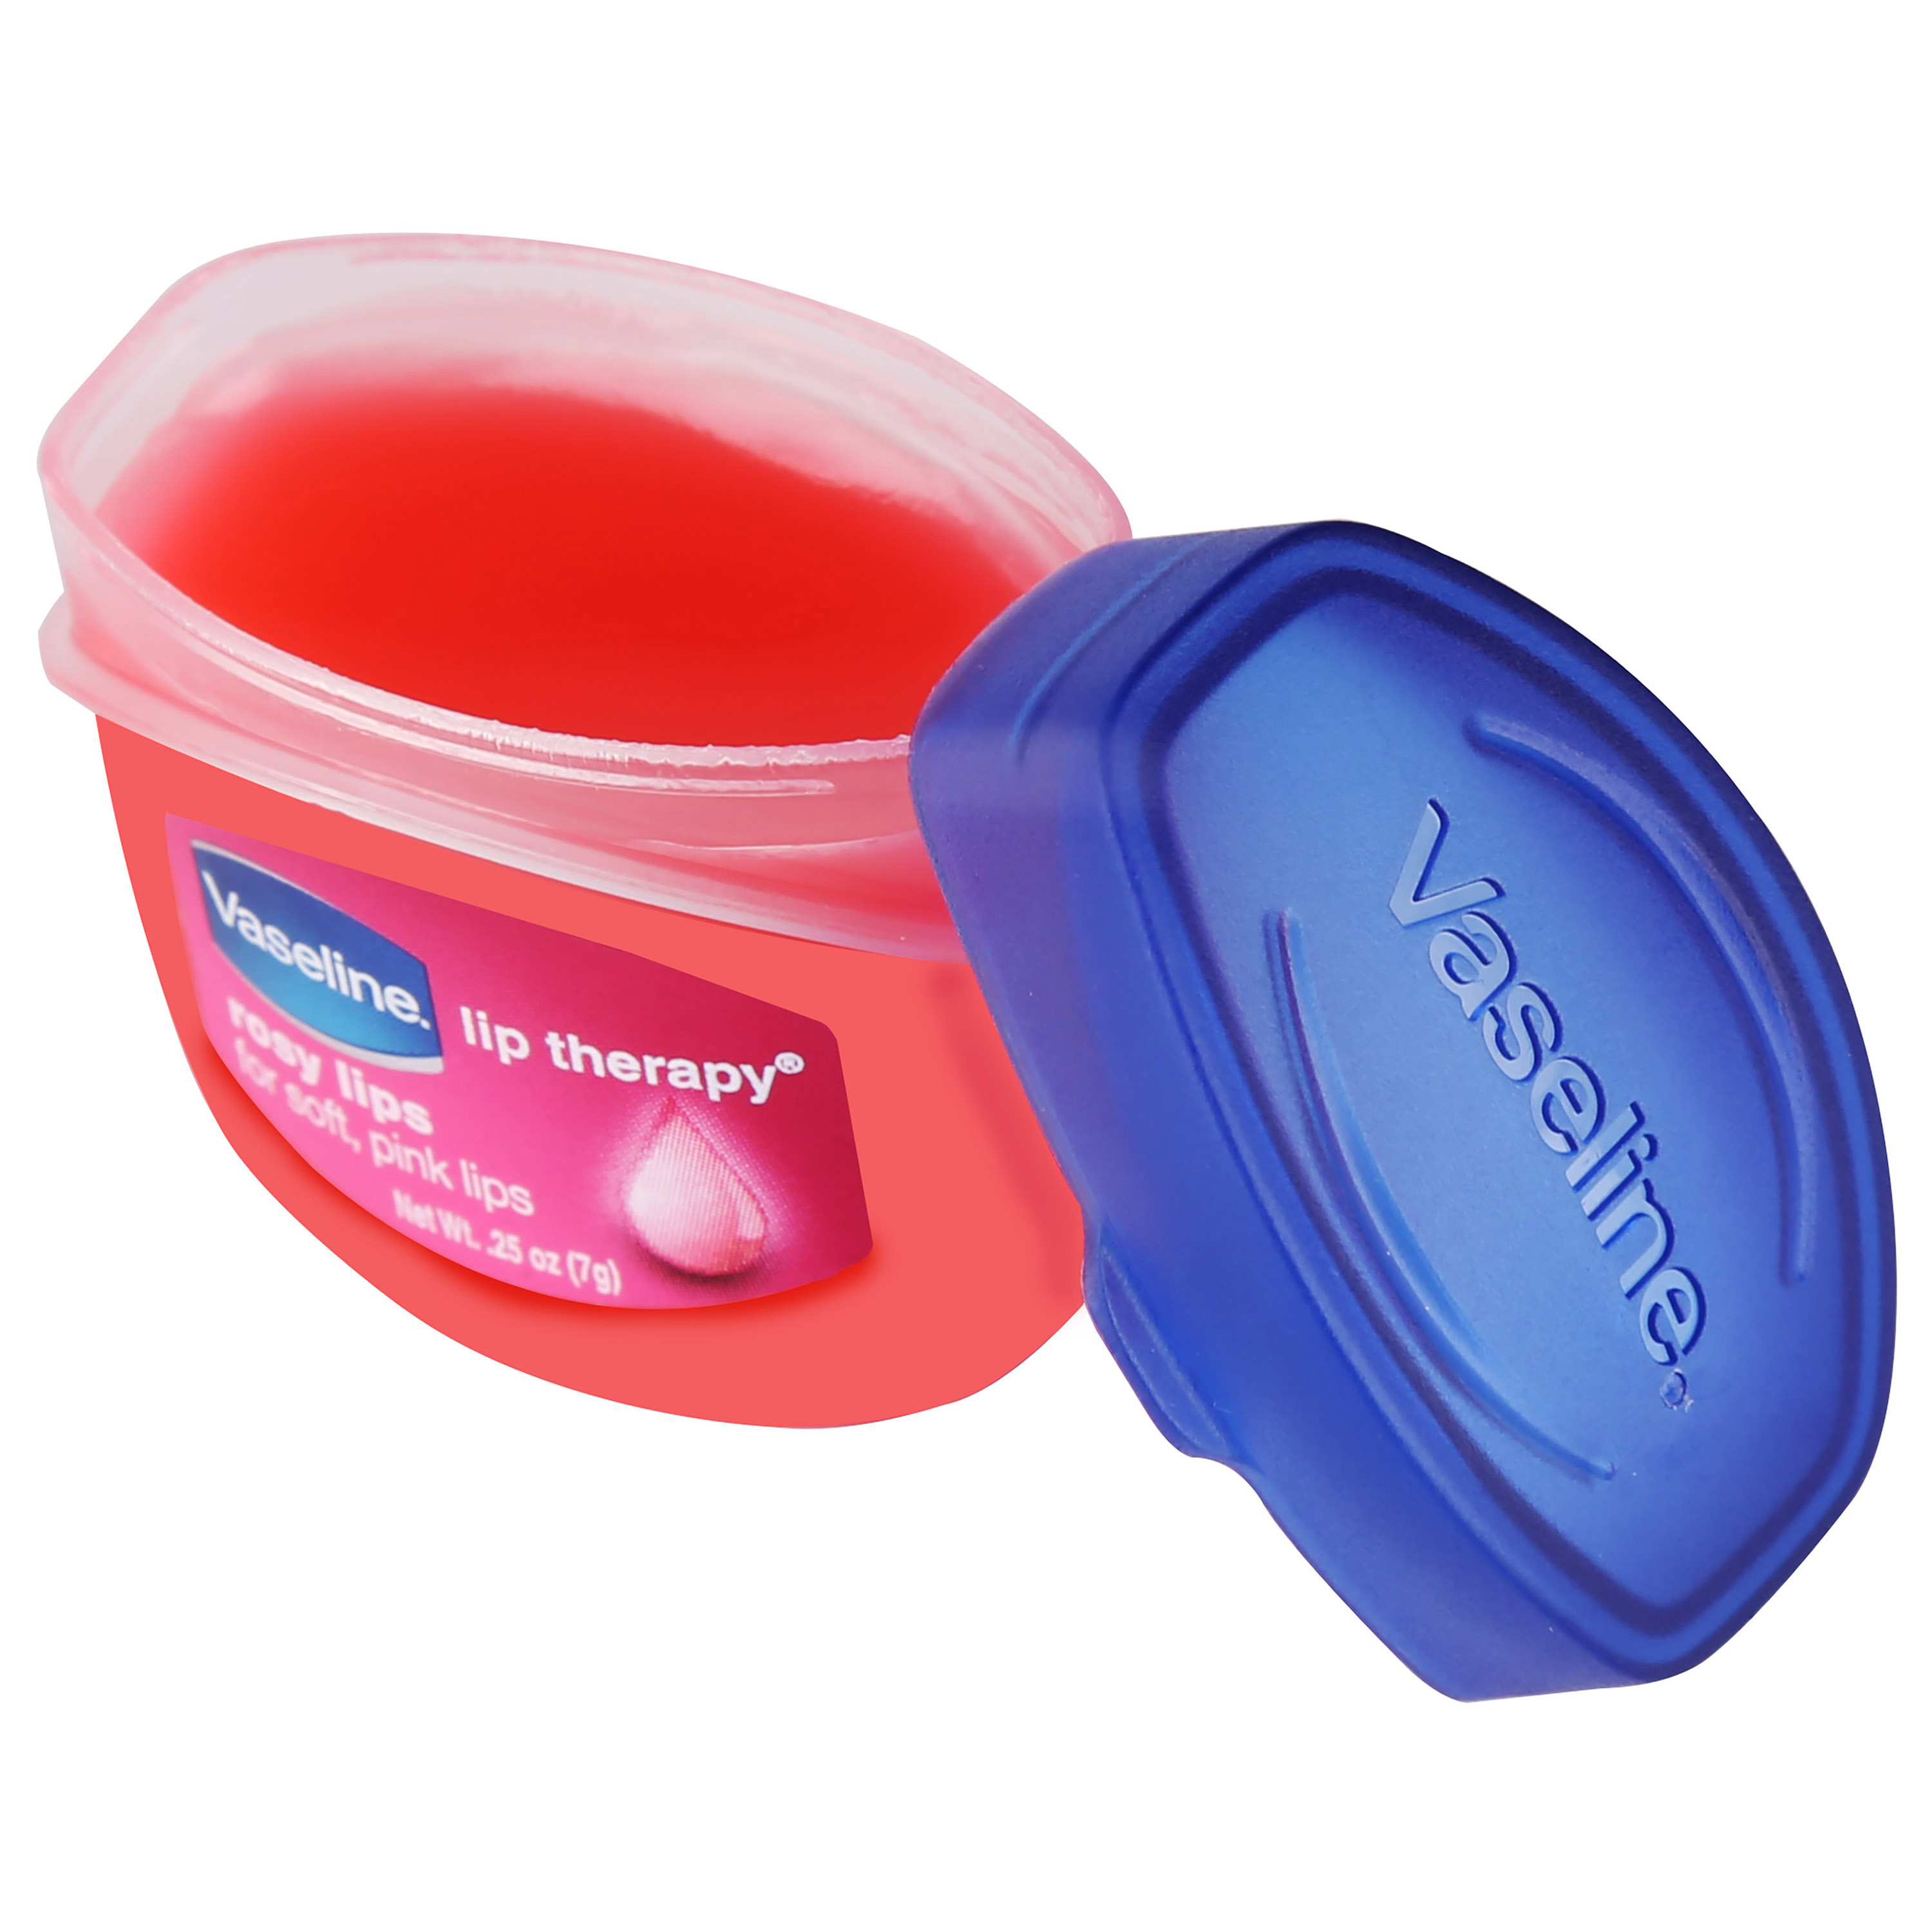 Vaseline Lip Therapy Tinted Lip Balm Mini, Rosy 0.25 oz - image 4 of 7